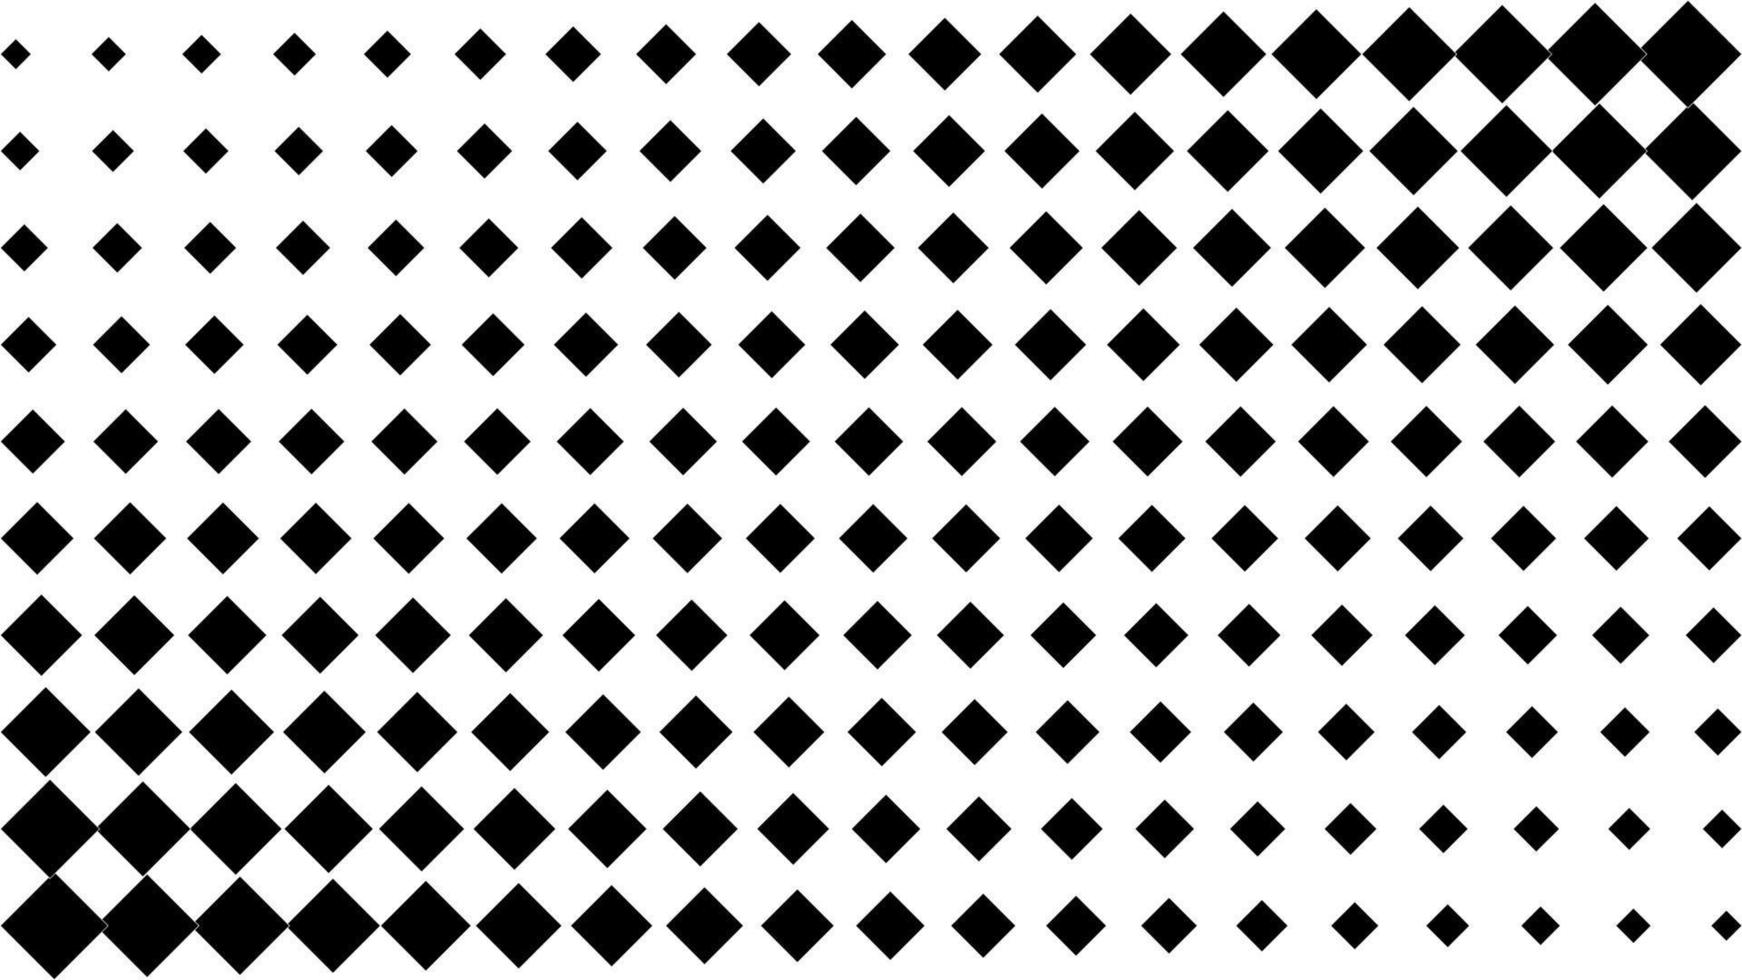 The diamond pattern halftones on white background vector